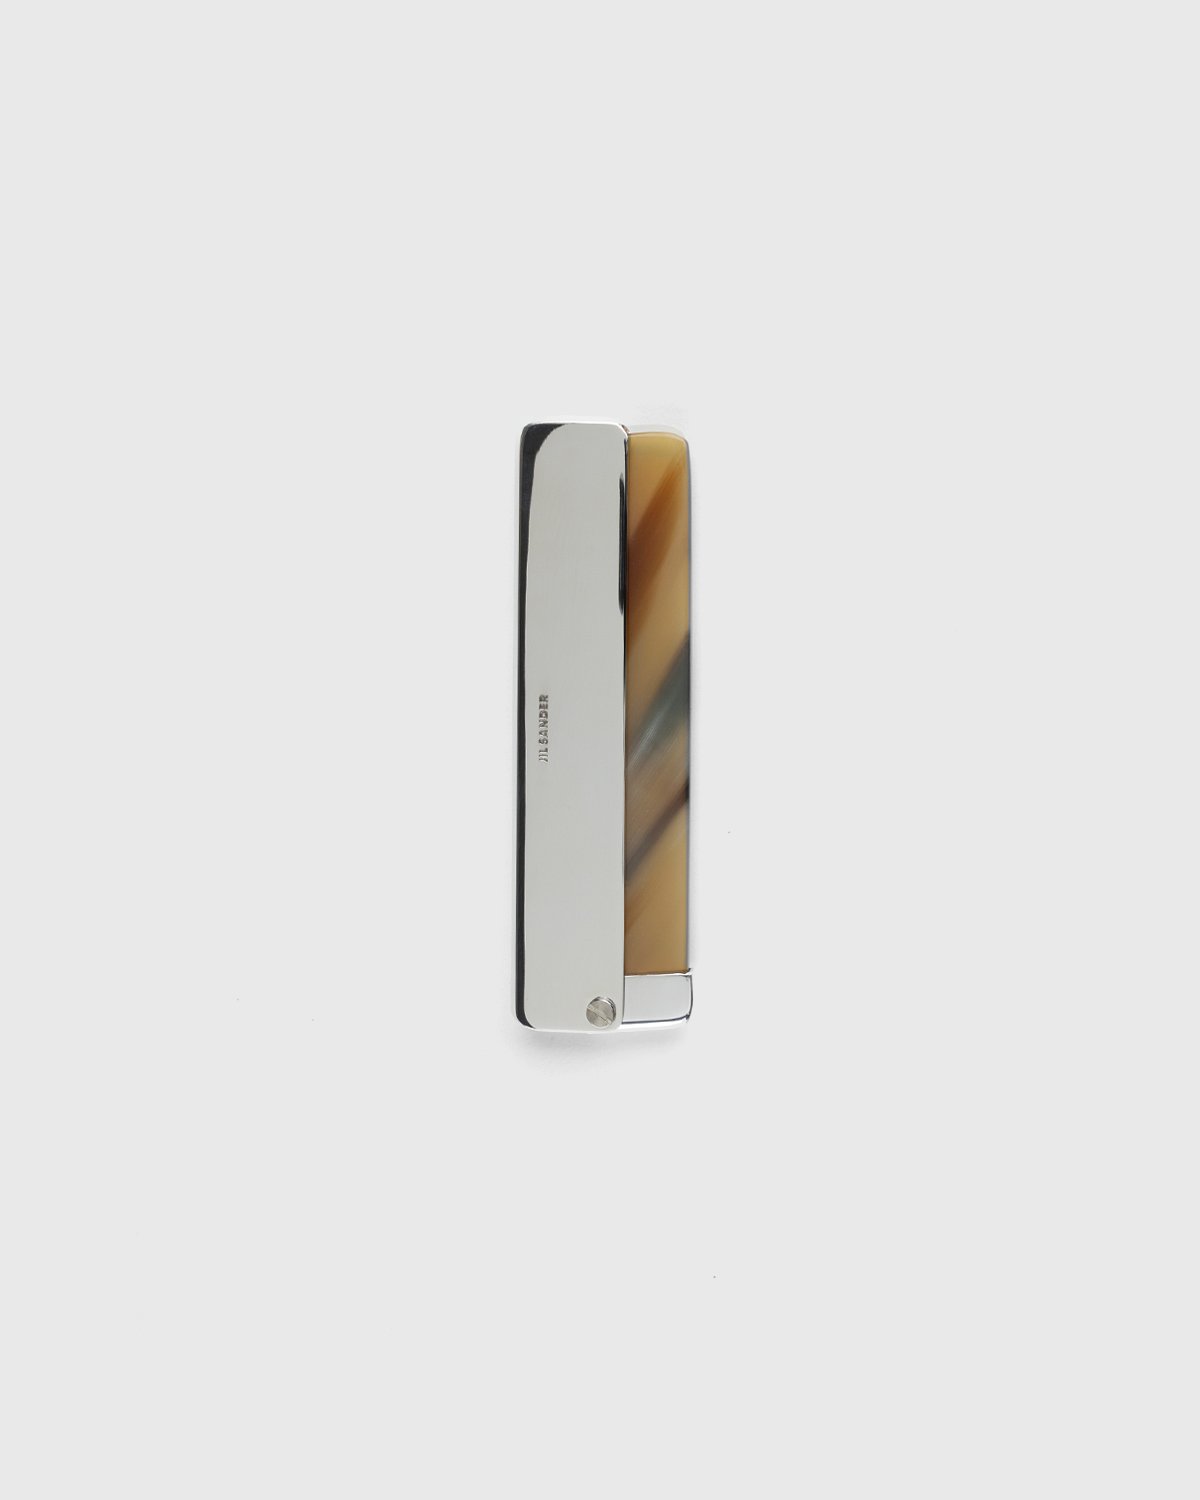 Jil Sander - Pocket Comb Case Silver - Lifestyle - Silver - Image 3